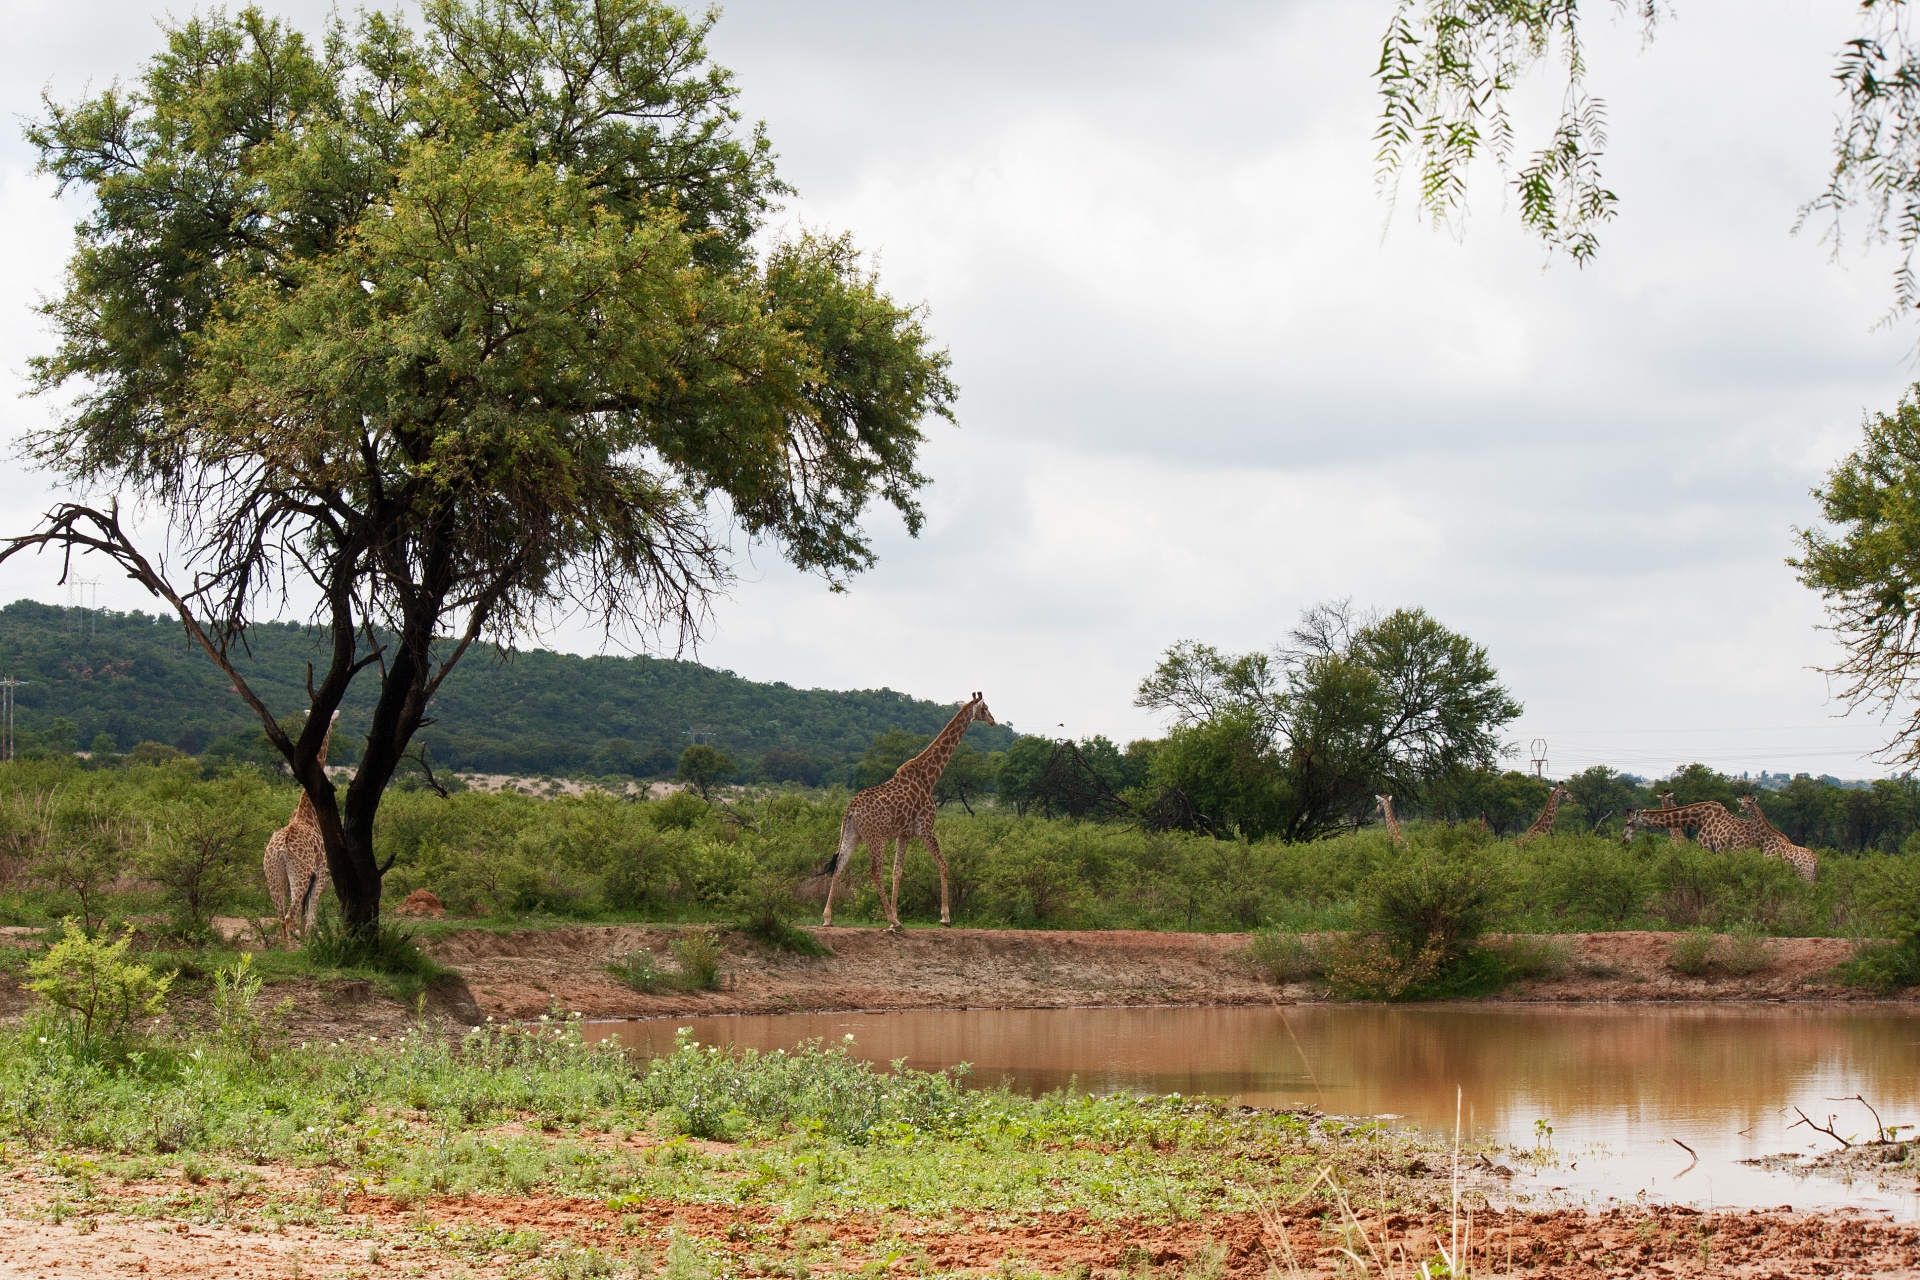 Giraffe Standing Near Water Hole